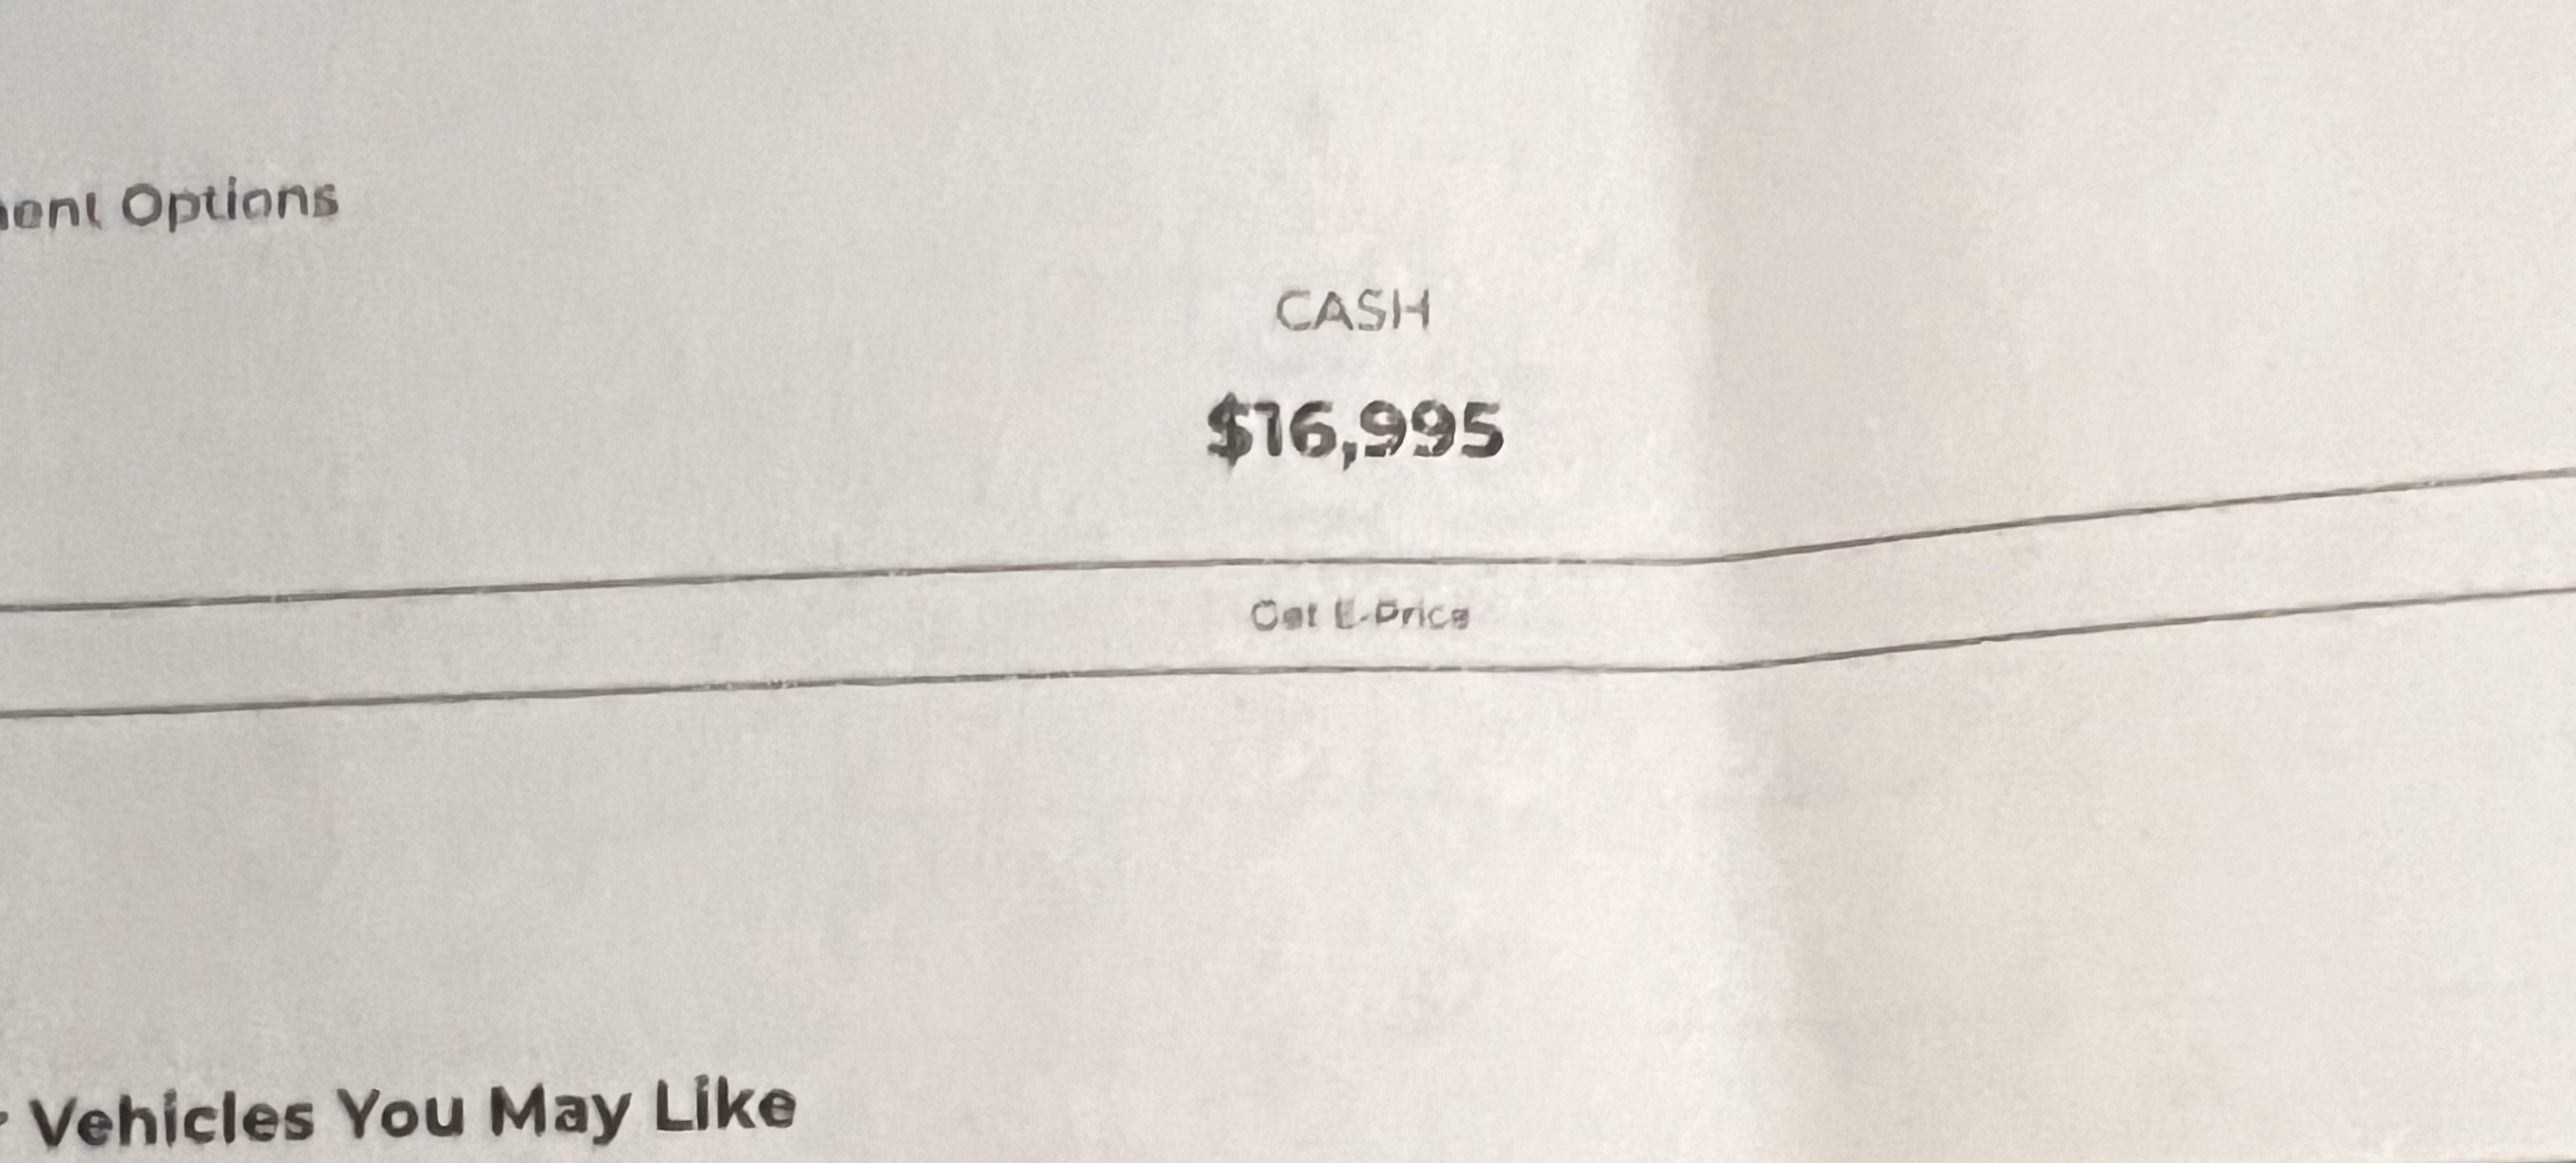 ADVERTISED CASH PRICE FOR SAME CAR